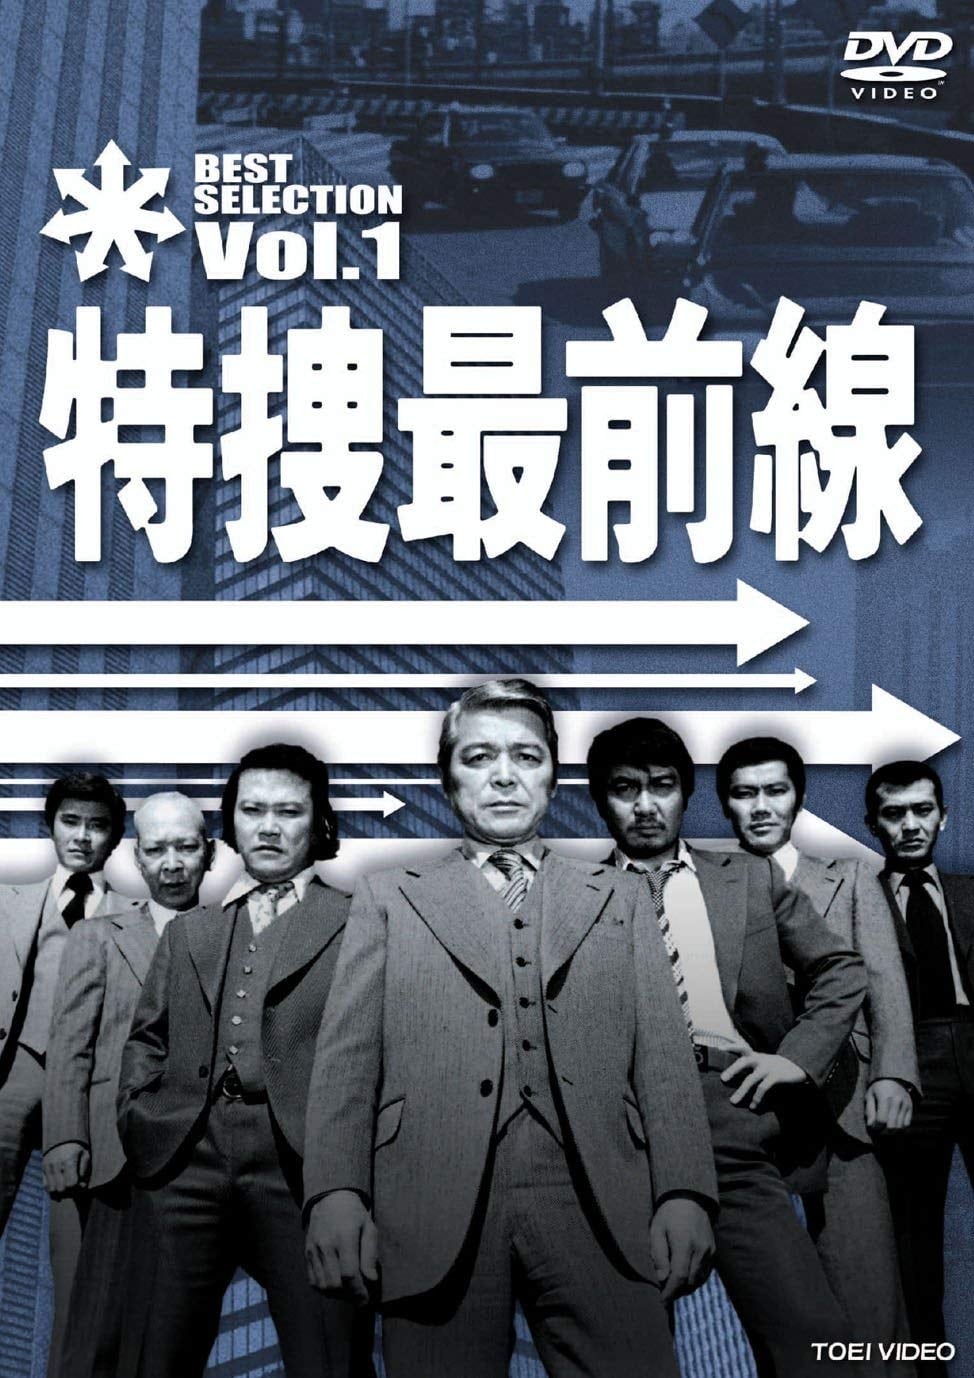 Japanese dvd